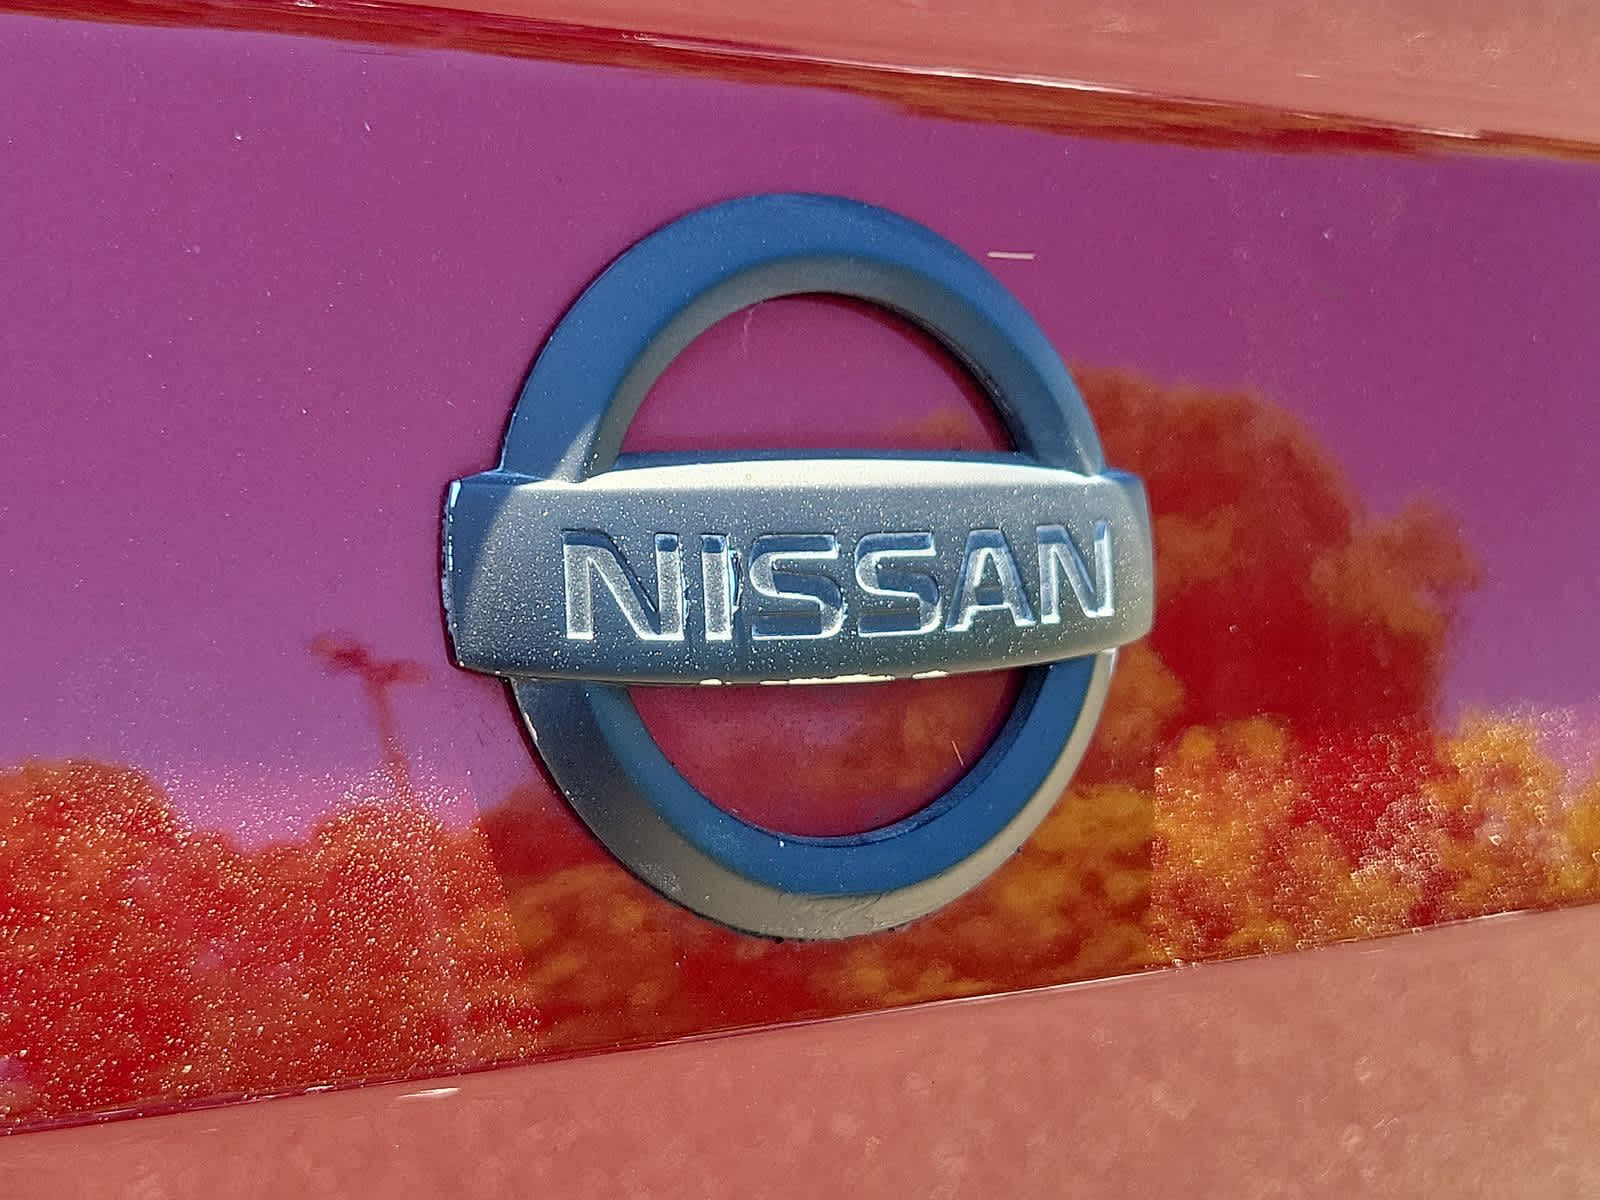 2019 Nissan Altima 2.5 SR 24